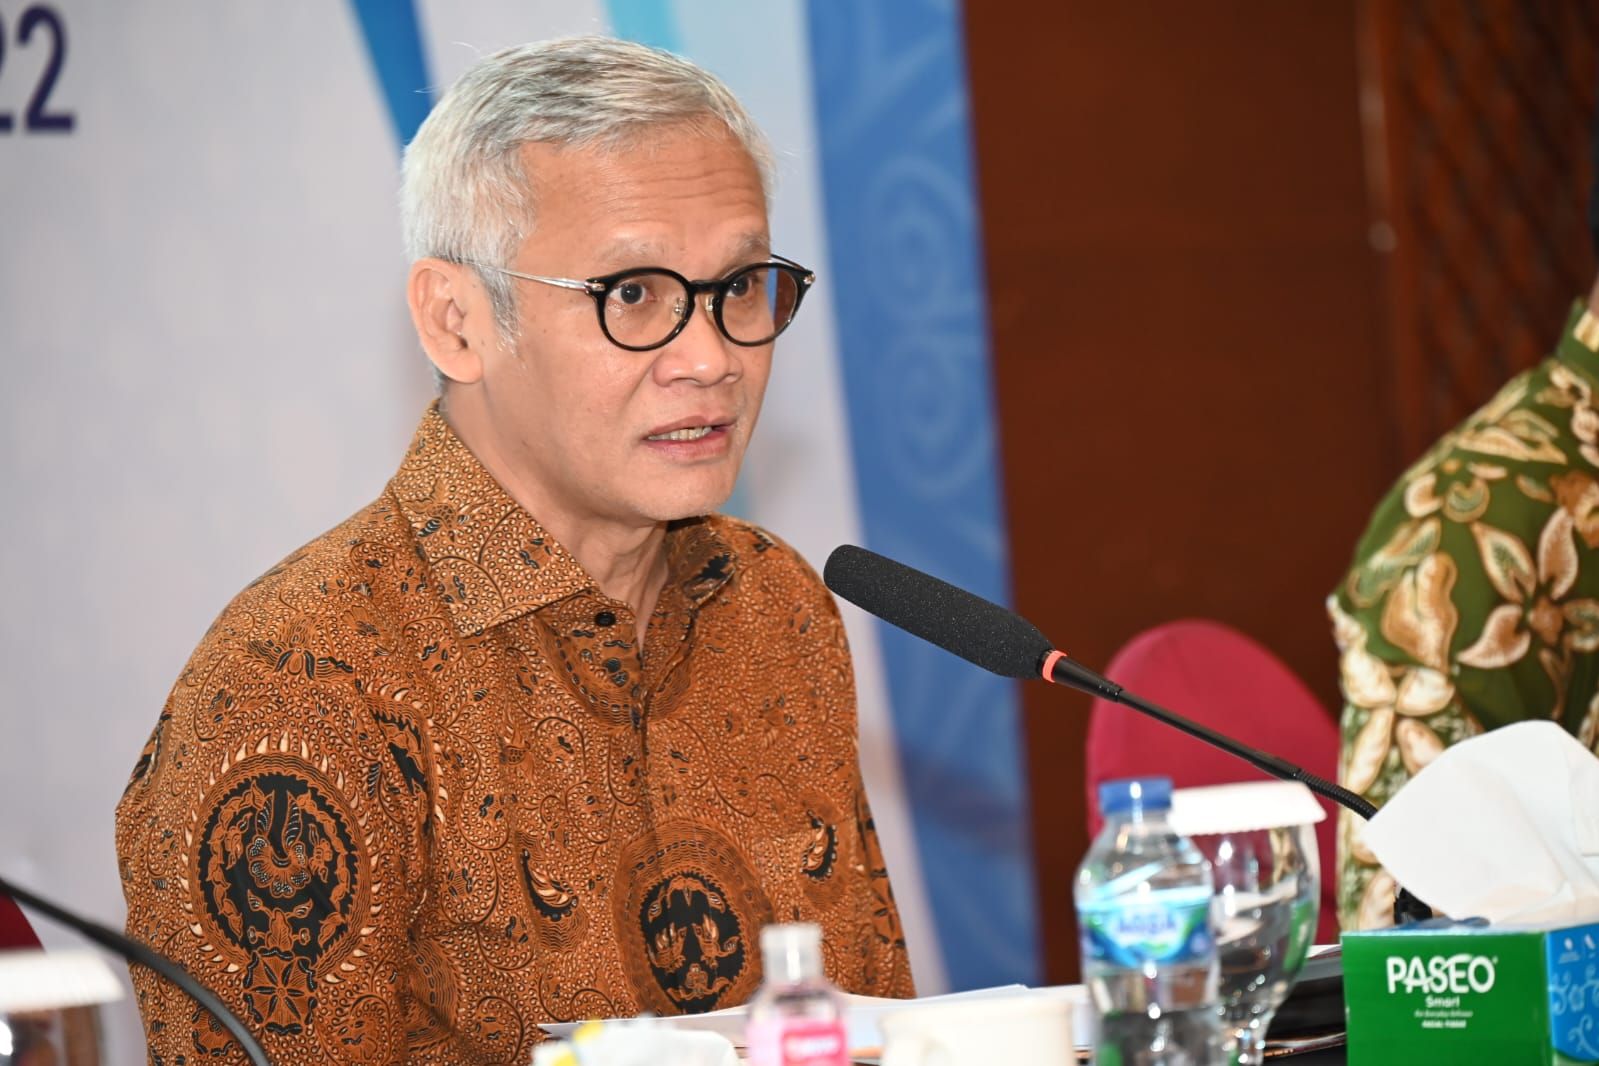 DPR Minta Erick Thohir Lanjutkan Restrukturisasi Keuangan di BUMN